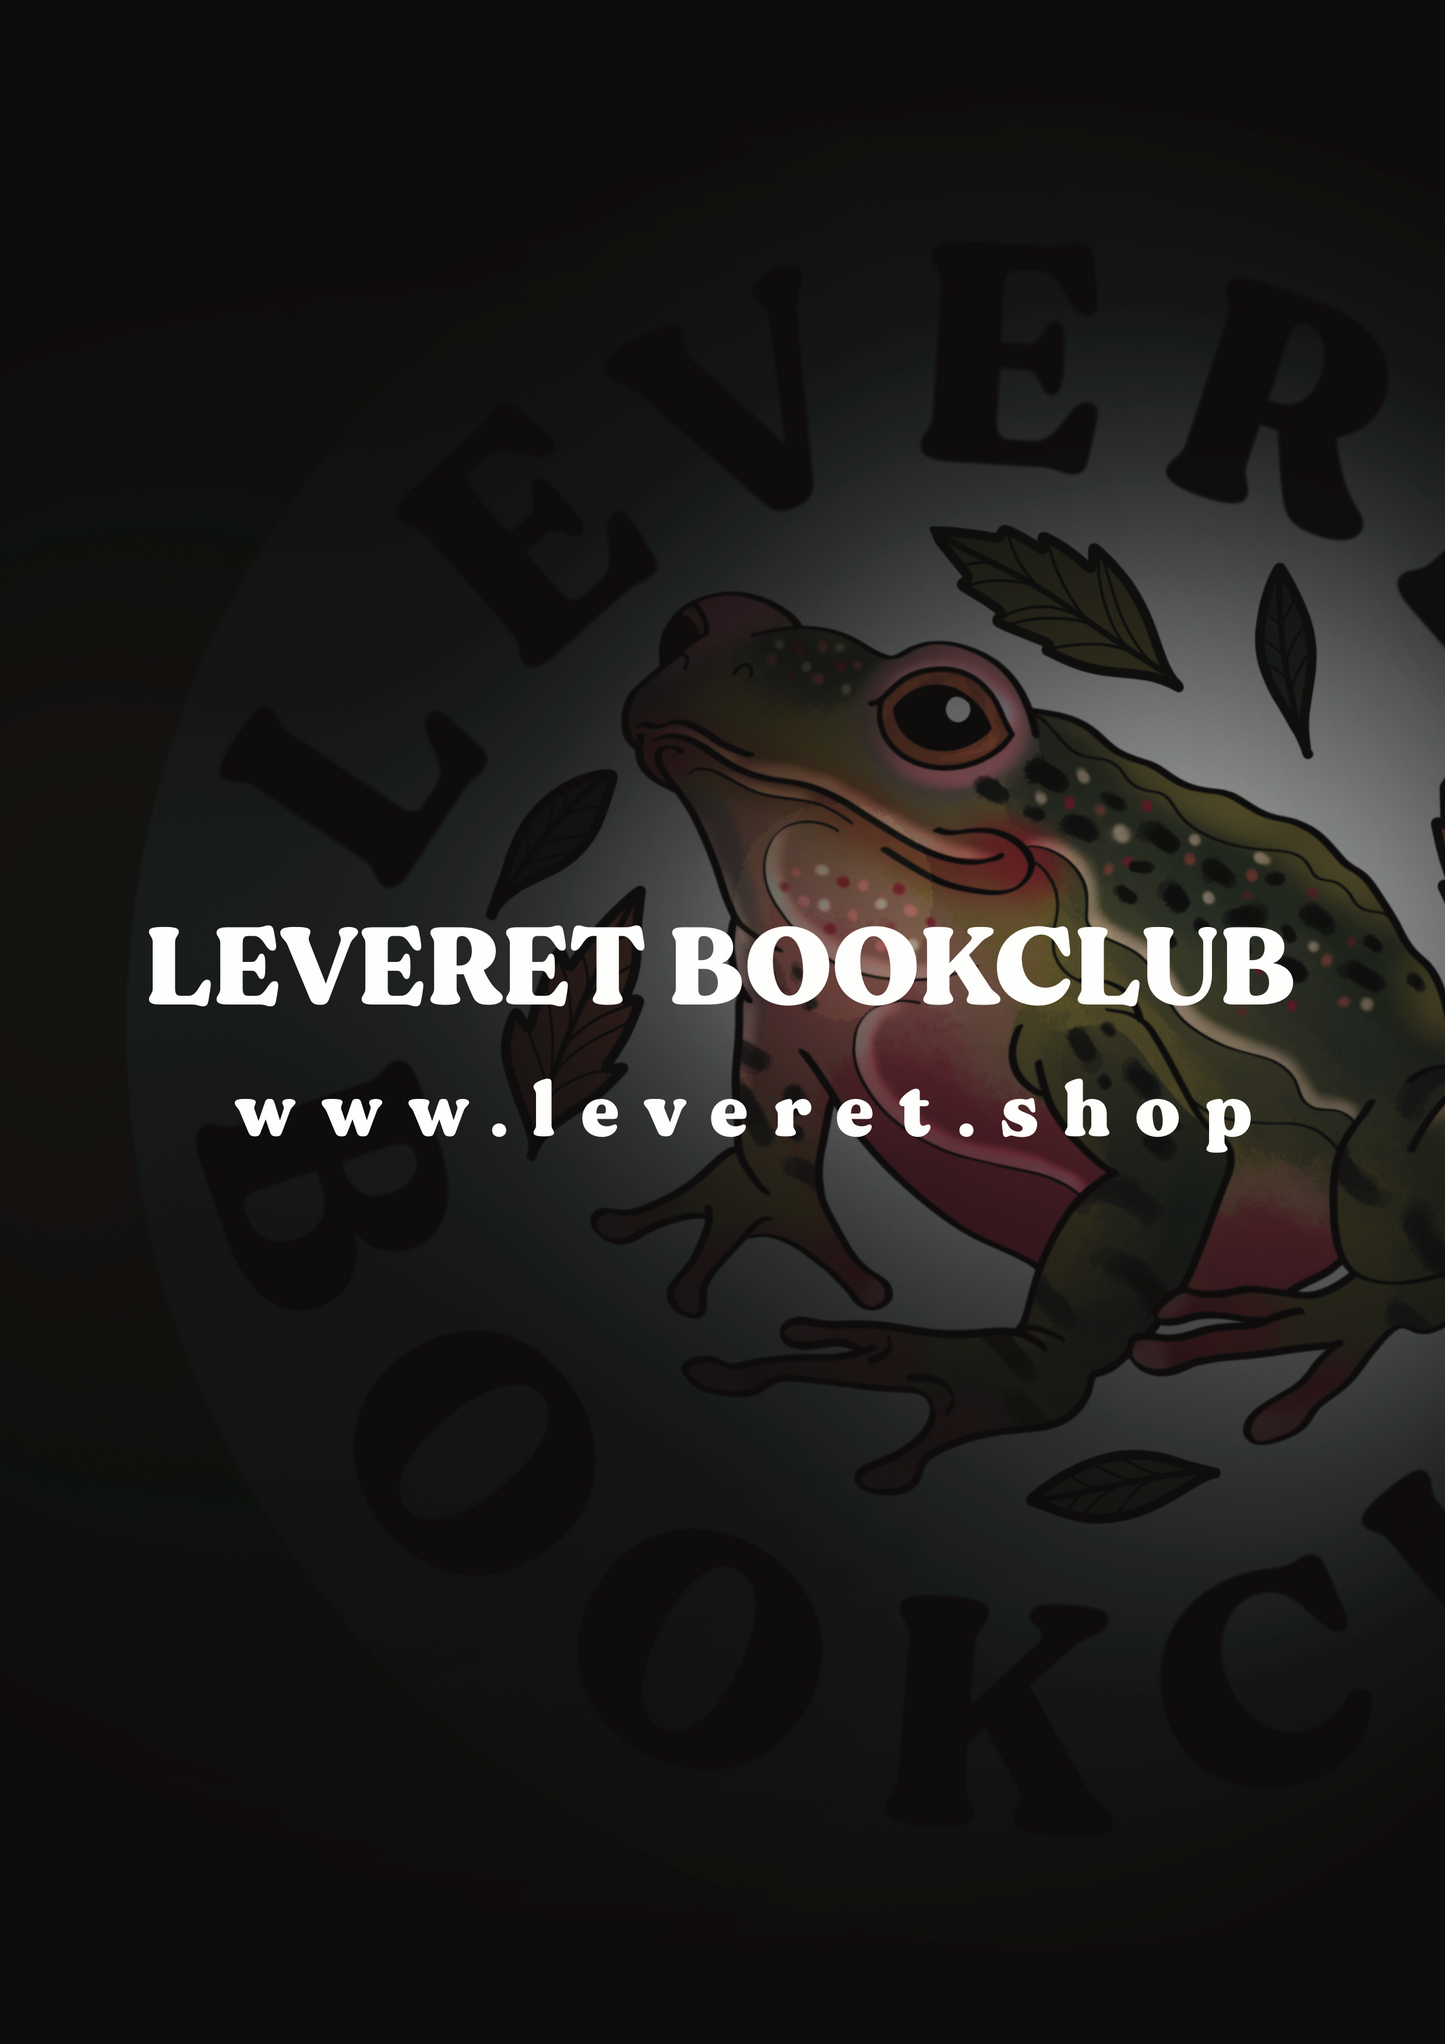 The Leveret Bookclub Box